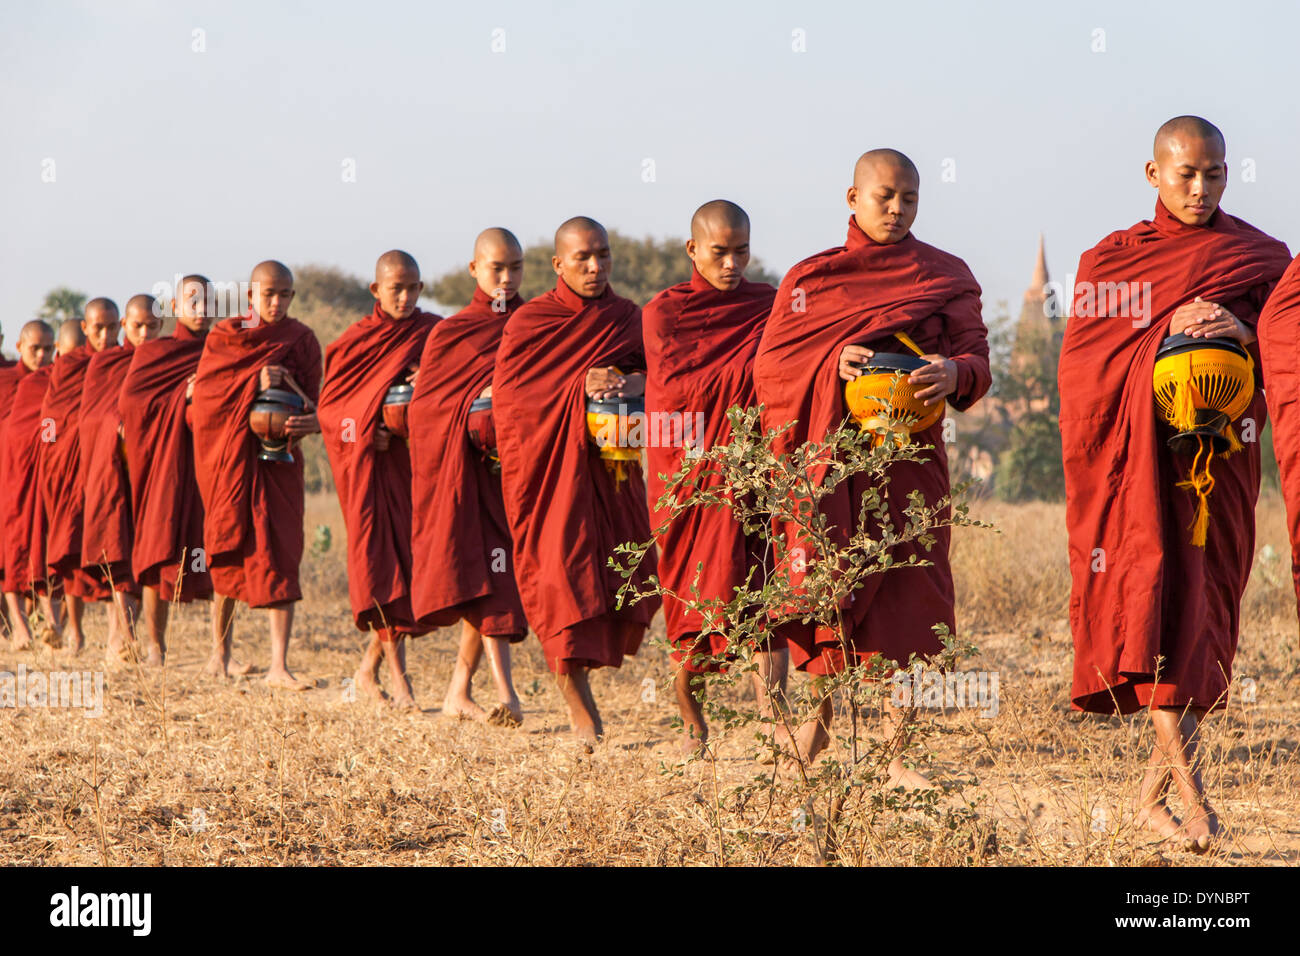 Una línea de monjes de salir a mendigar su comida diaria de las aldeas. Foto de stock